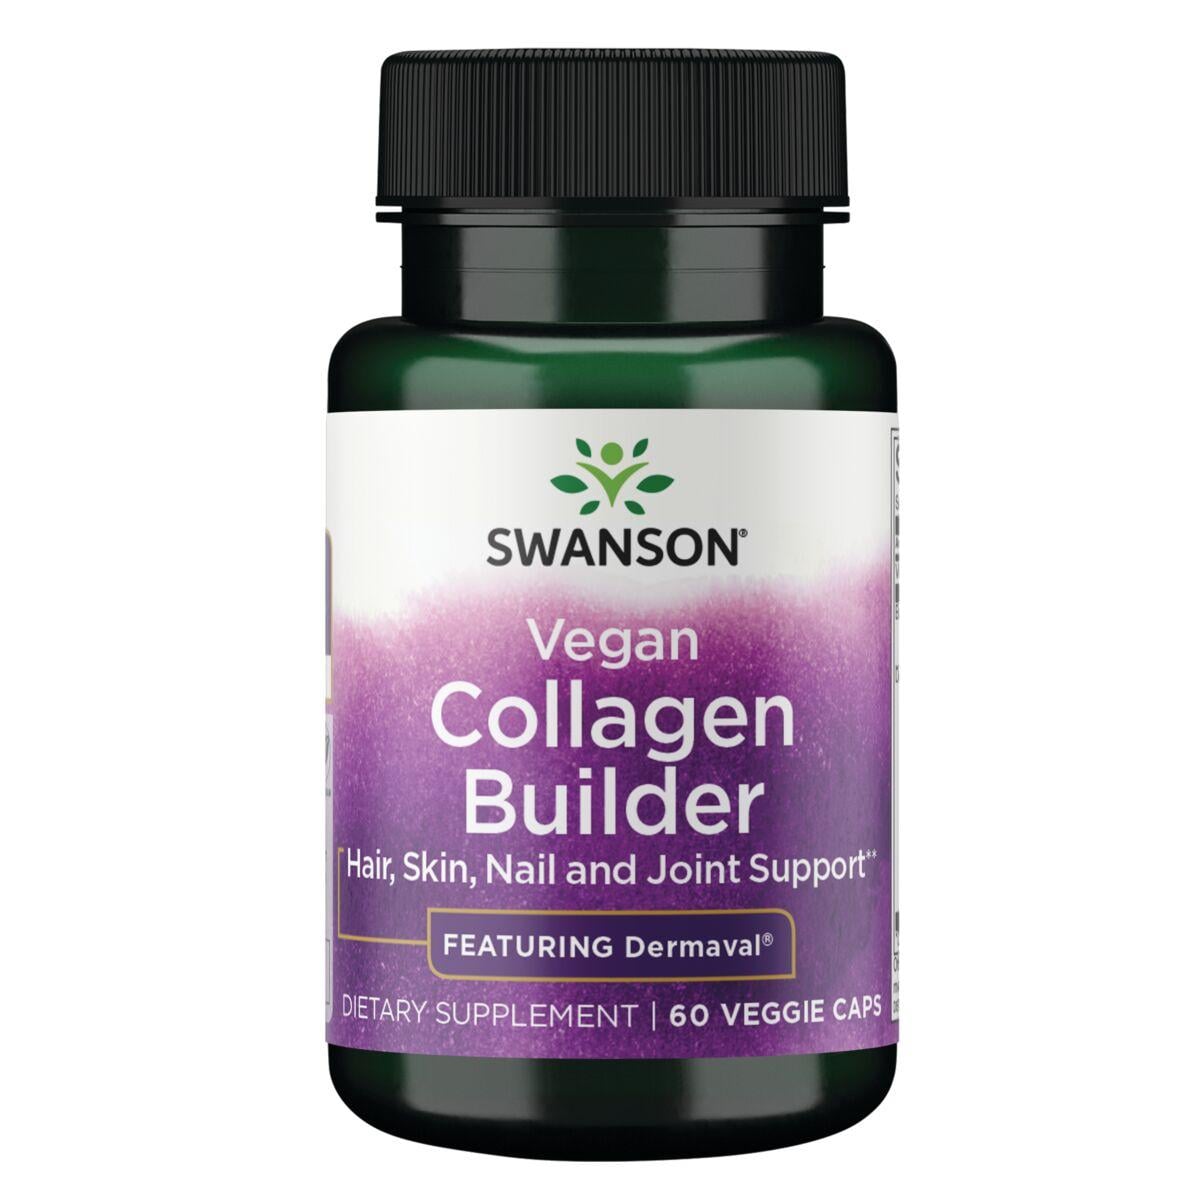 Swanson Premium Vegan Collagen Builder - Featuring Dermaval Supplement Vitamin 60 Veg Caps